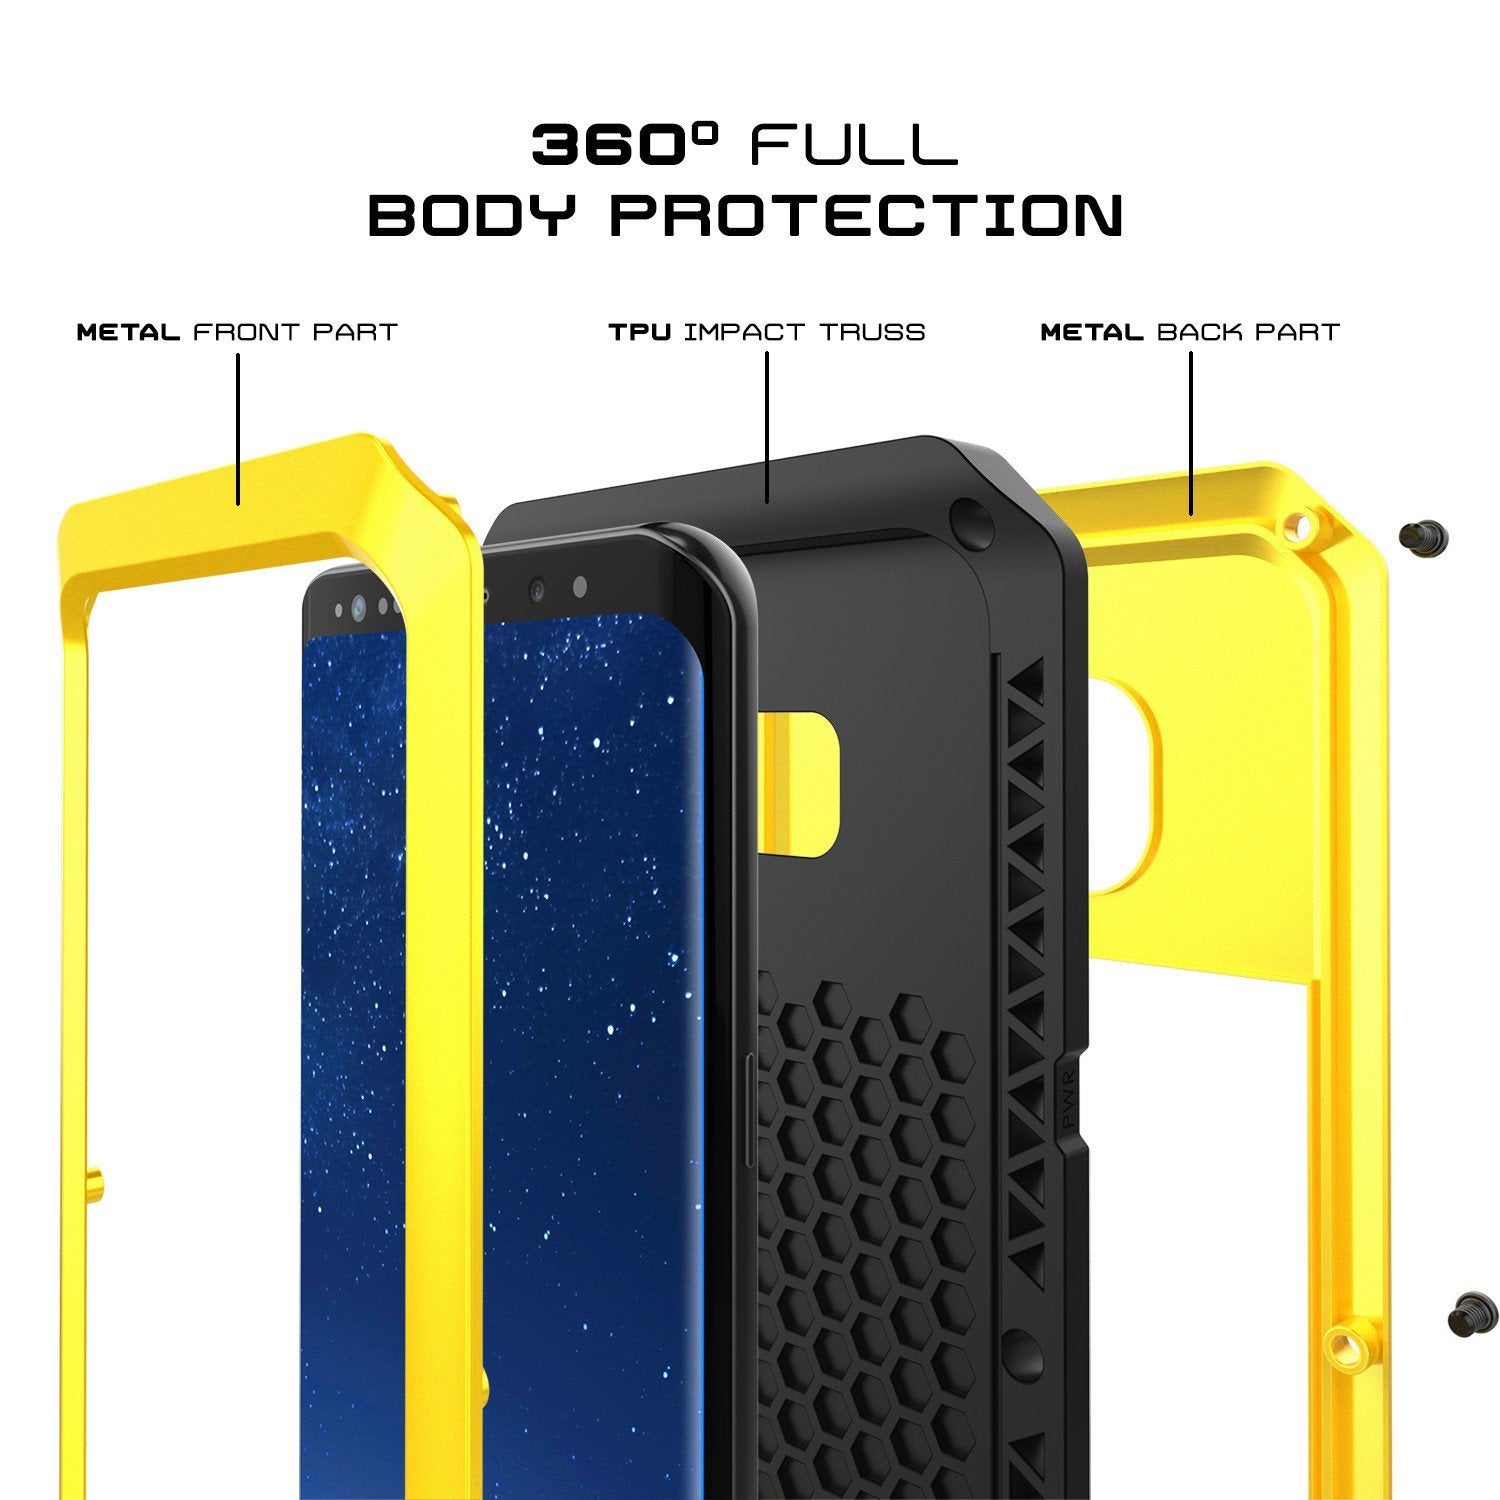 Galaxy Note 8  Case, PUNKcase Metallic Neon Shockproof  Slim Metal Armor Case [Yellow] - PunkCase NZ